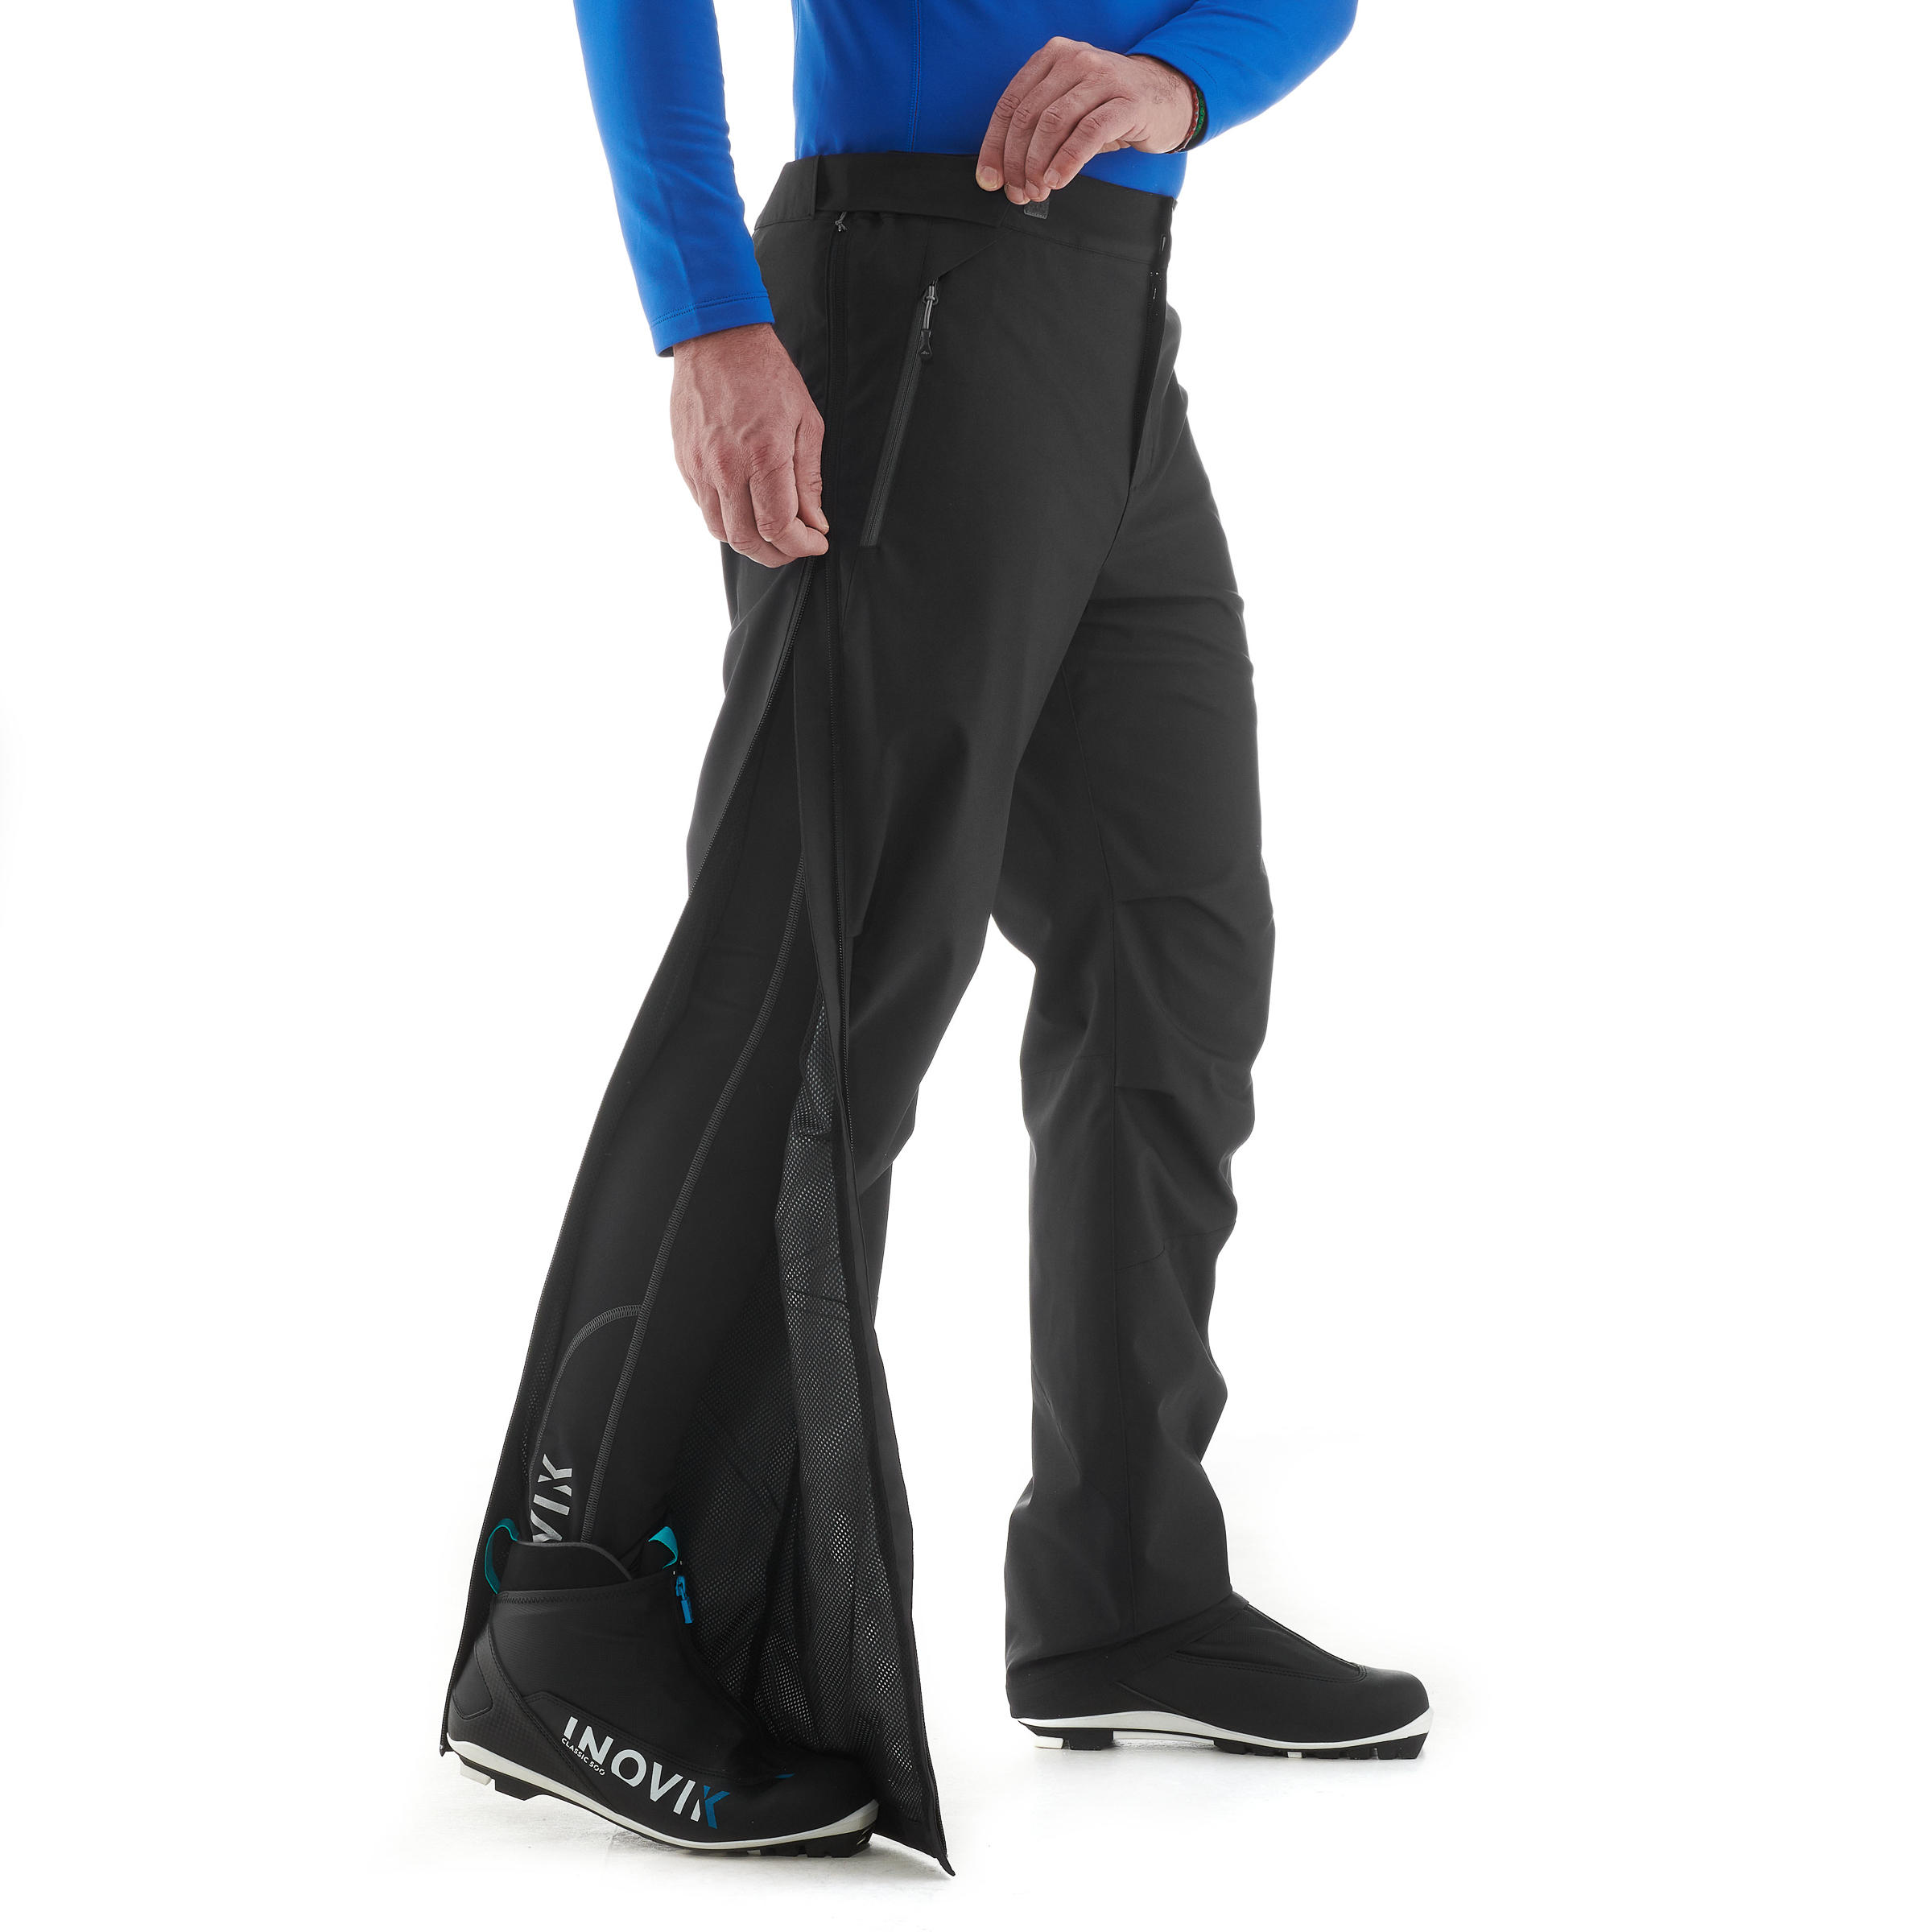 Men's Cross-Country Skiing Pants - 150 - INOVIK